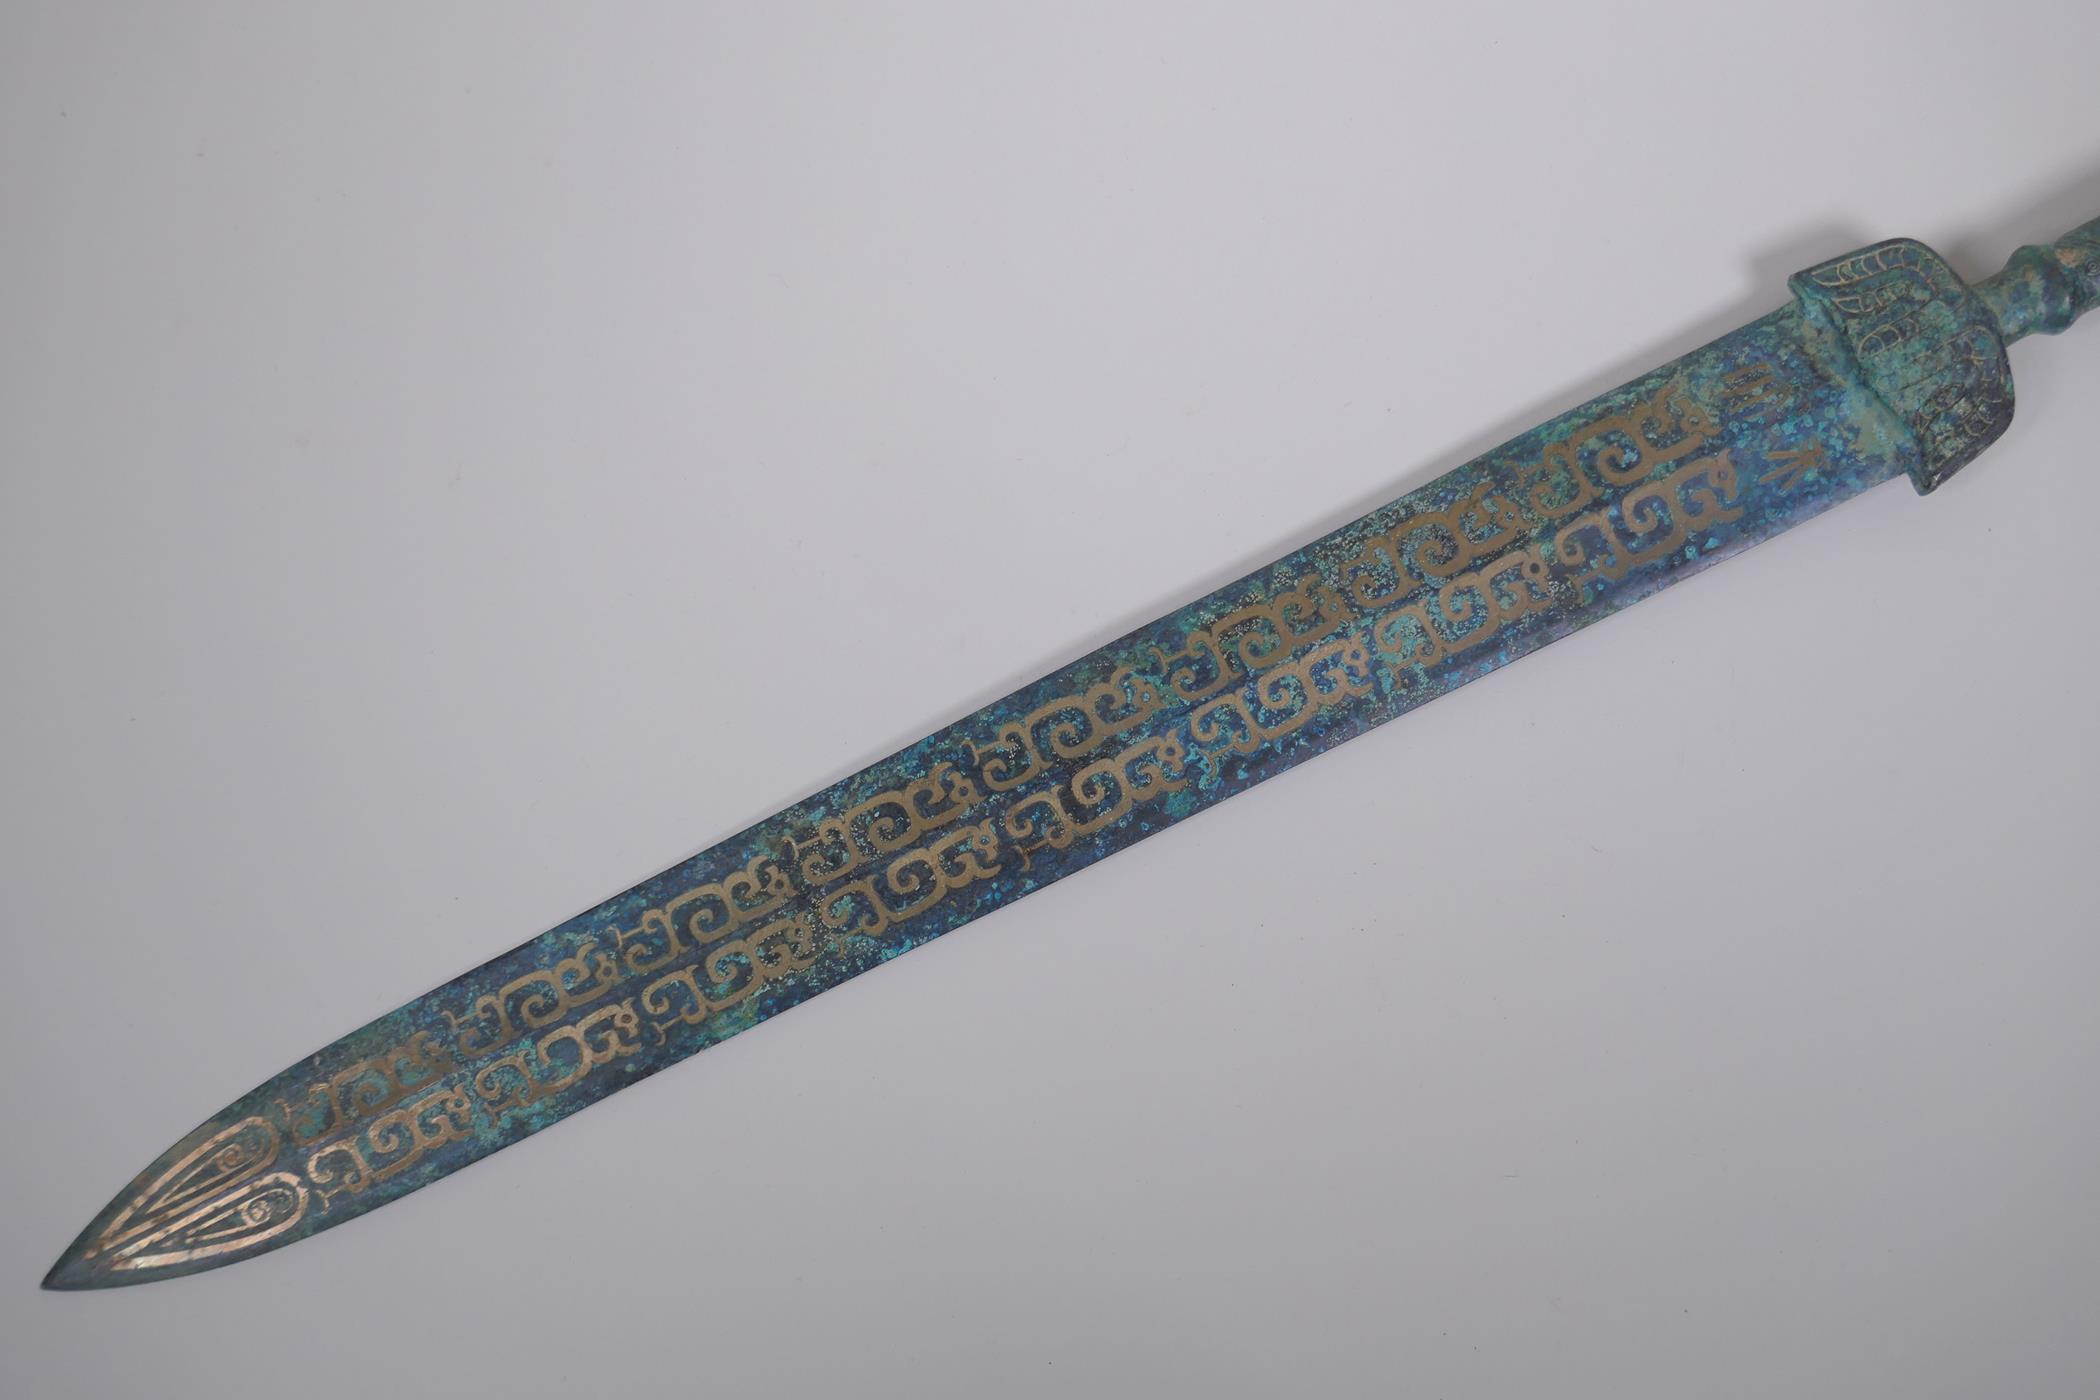 A bronze Archaic style short sword, 62cm long - Image 2 of 3